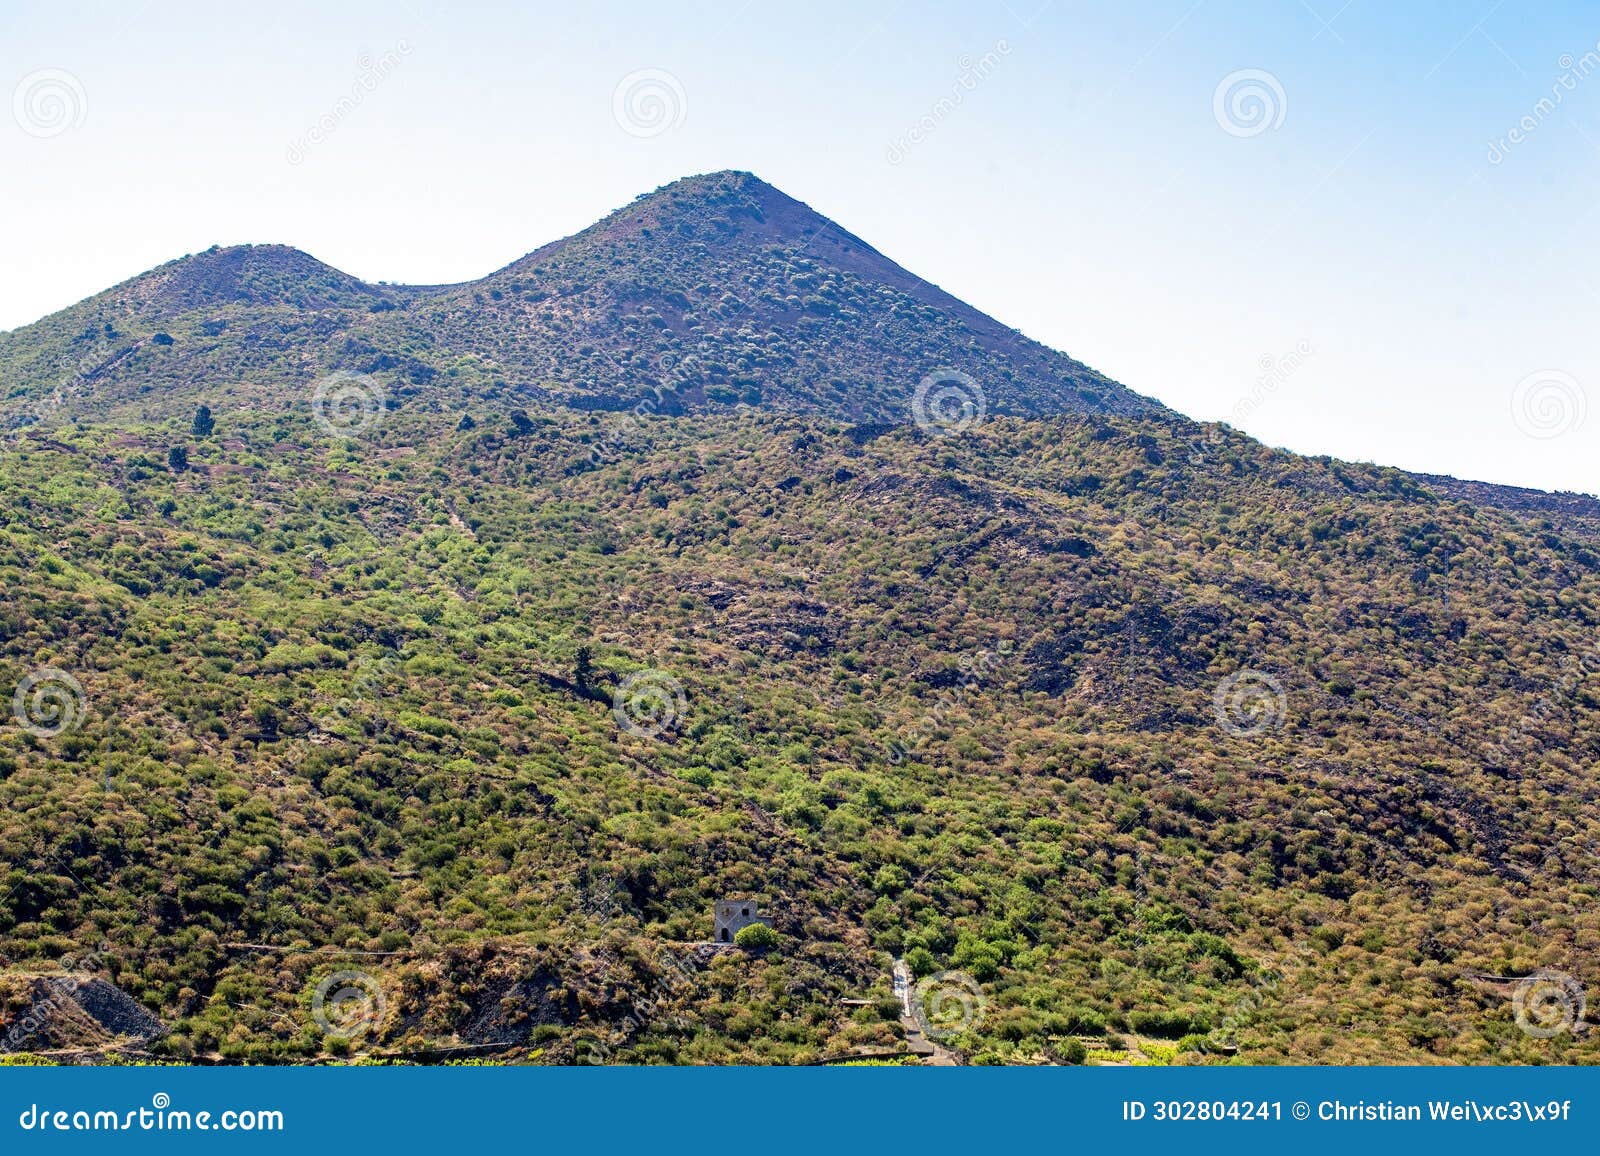 landscape at the vale de arriba, tenerife